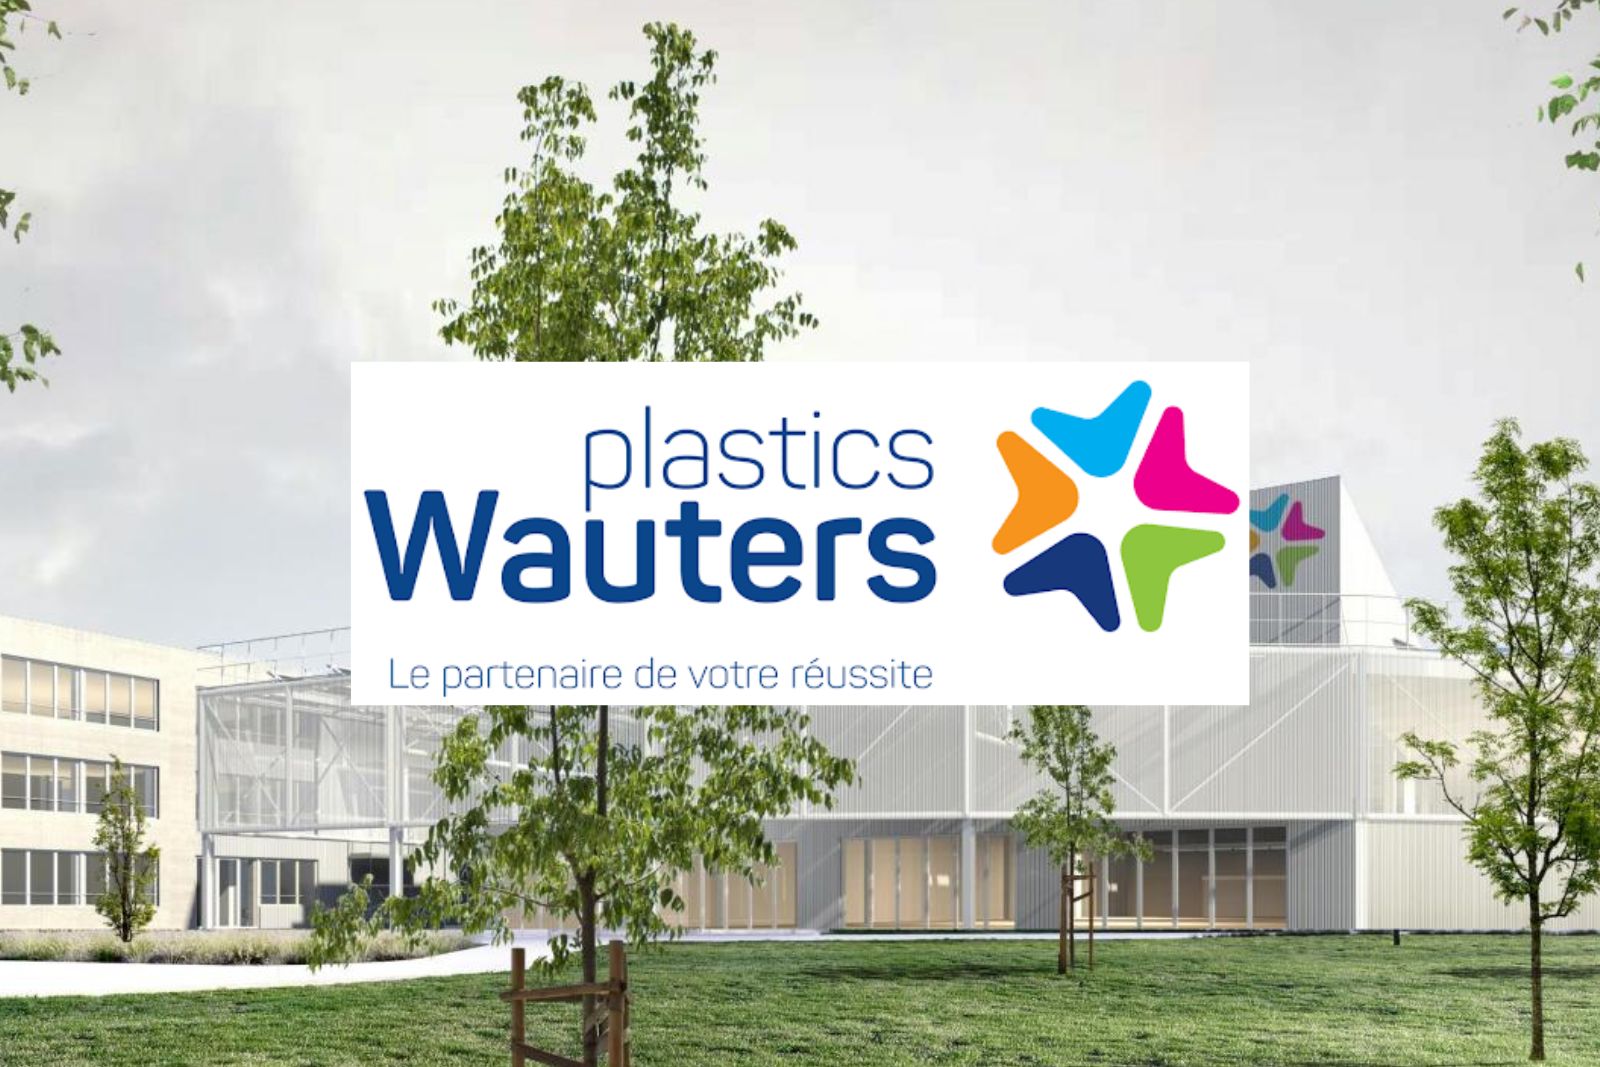 Plastics Wauters